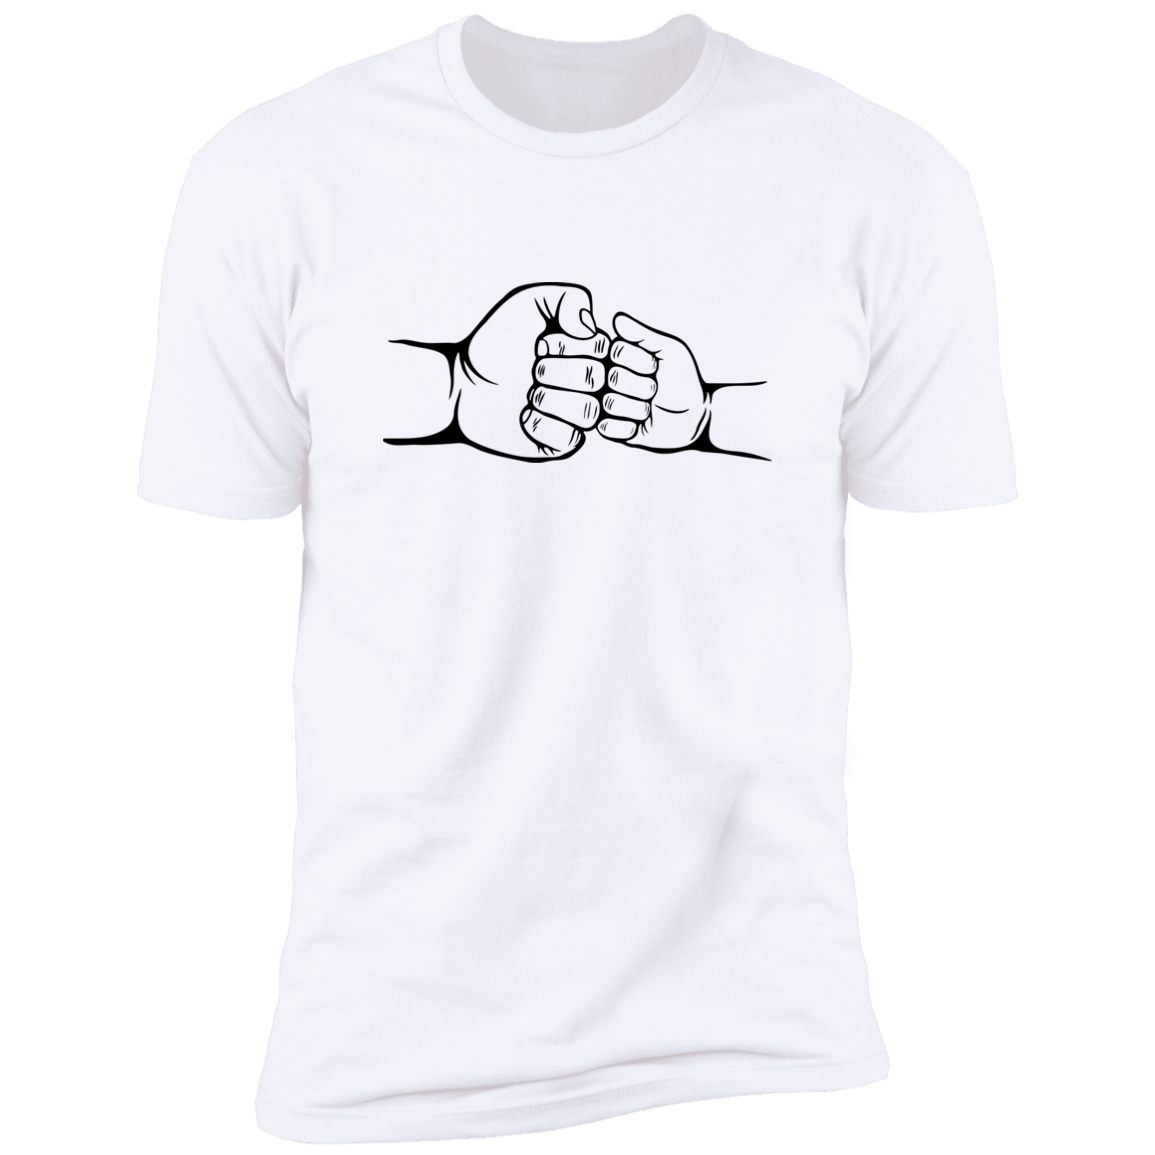 White Shirt Short Sleeve - Fist Bump 2